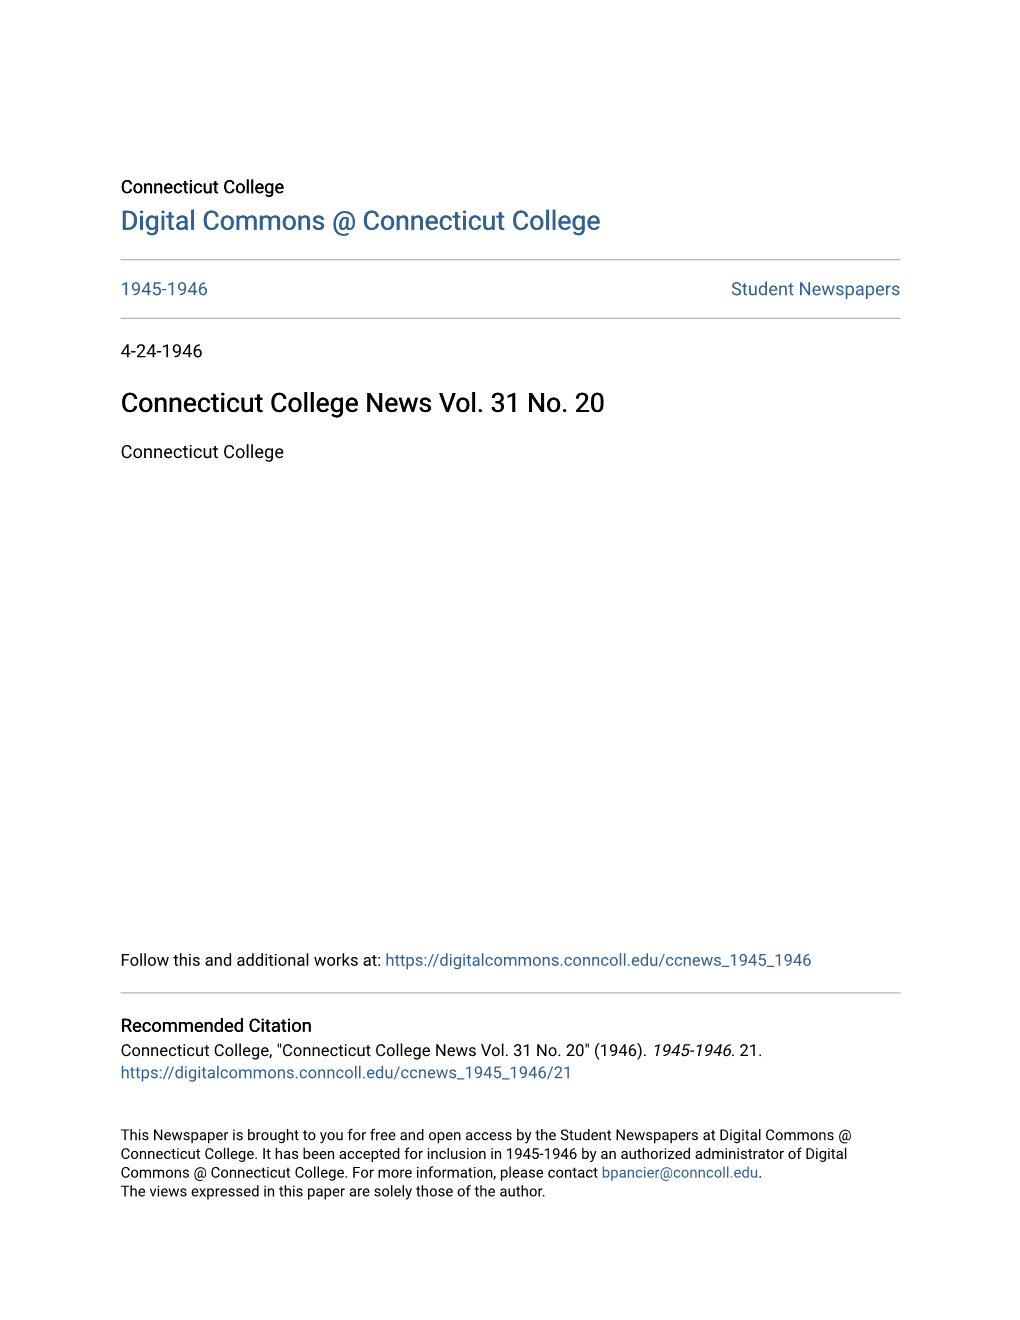 Connecticut College News Vol. 31 No. 20